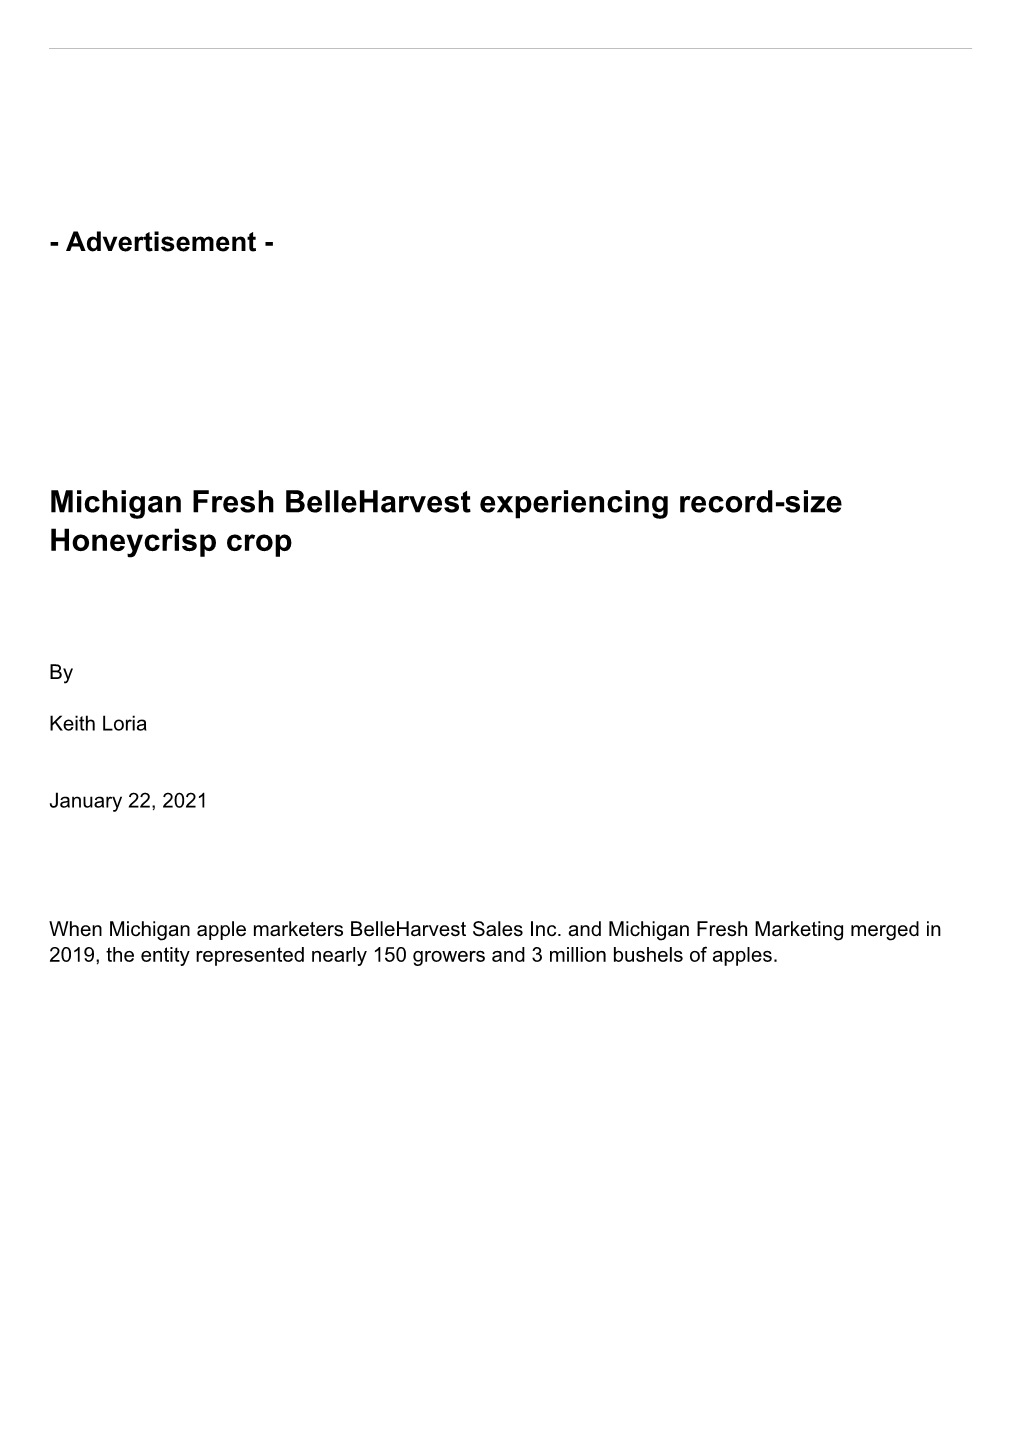 Michigan Fresh Belleharvest Experiencing Record-Size Honeycrisp Crop